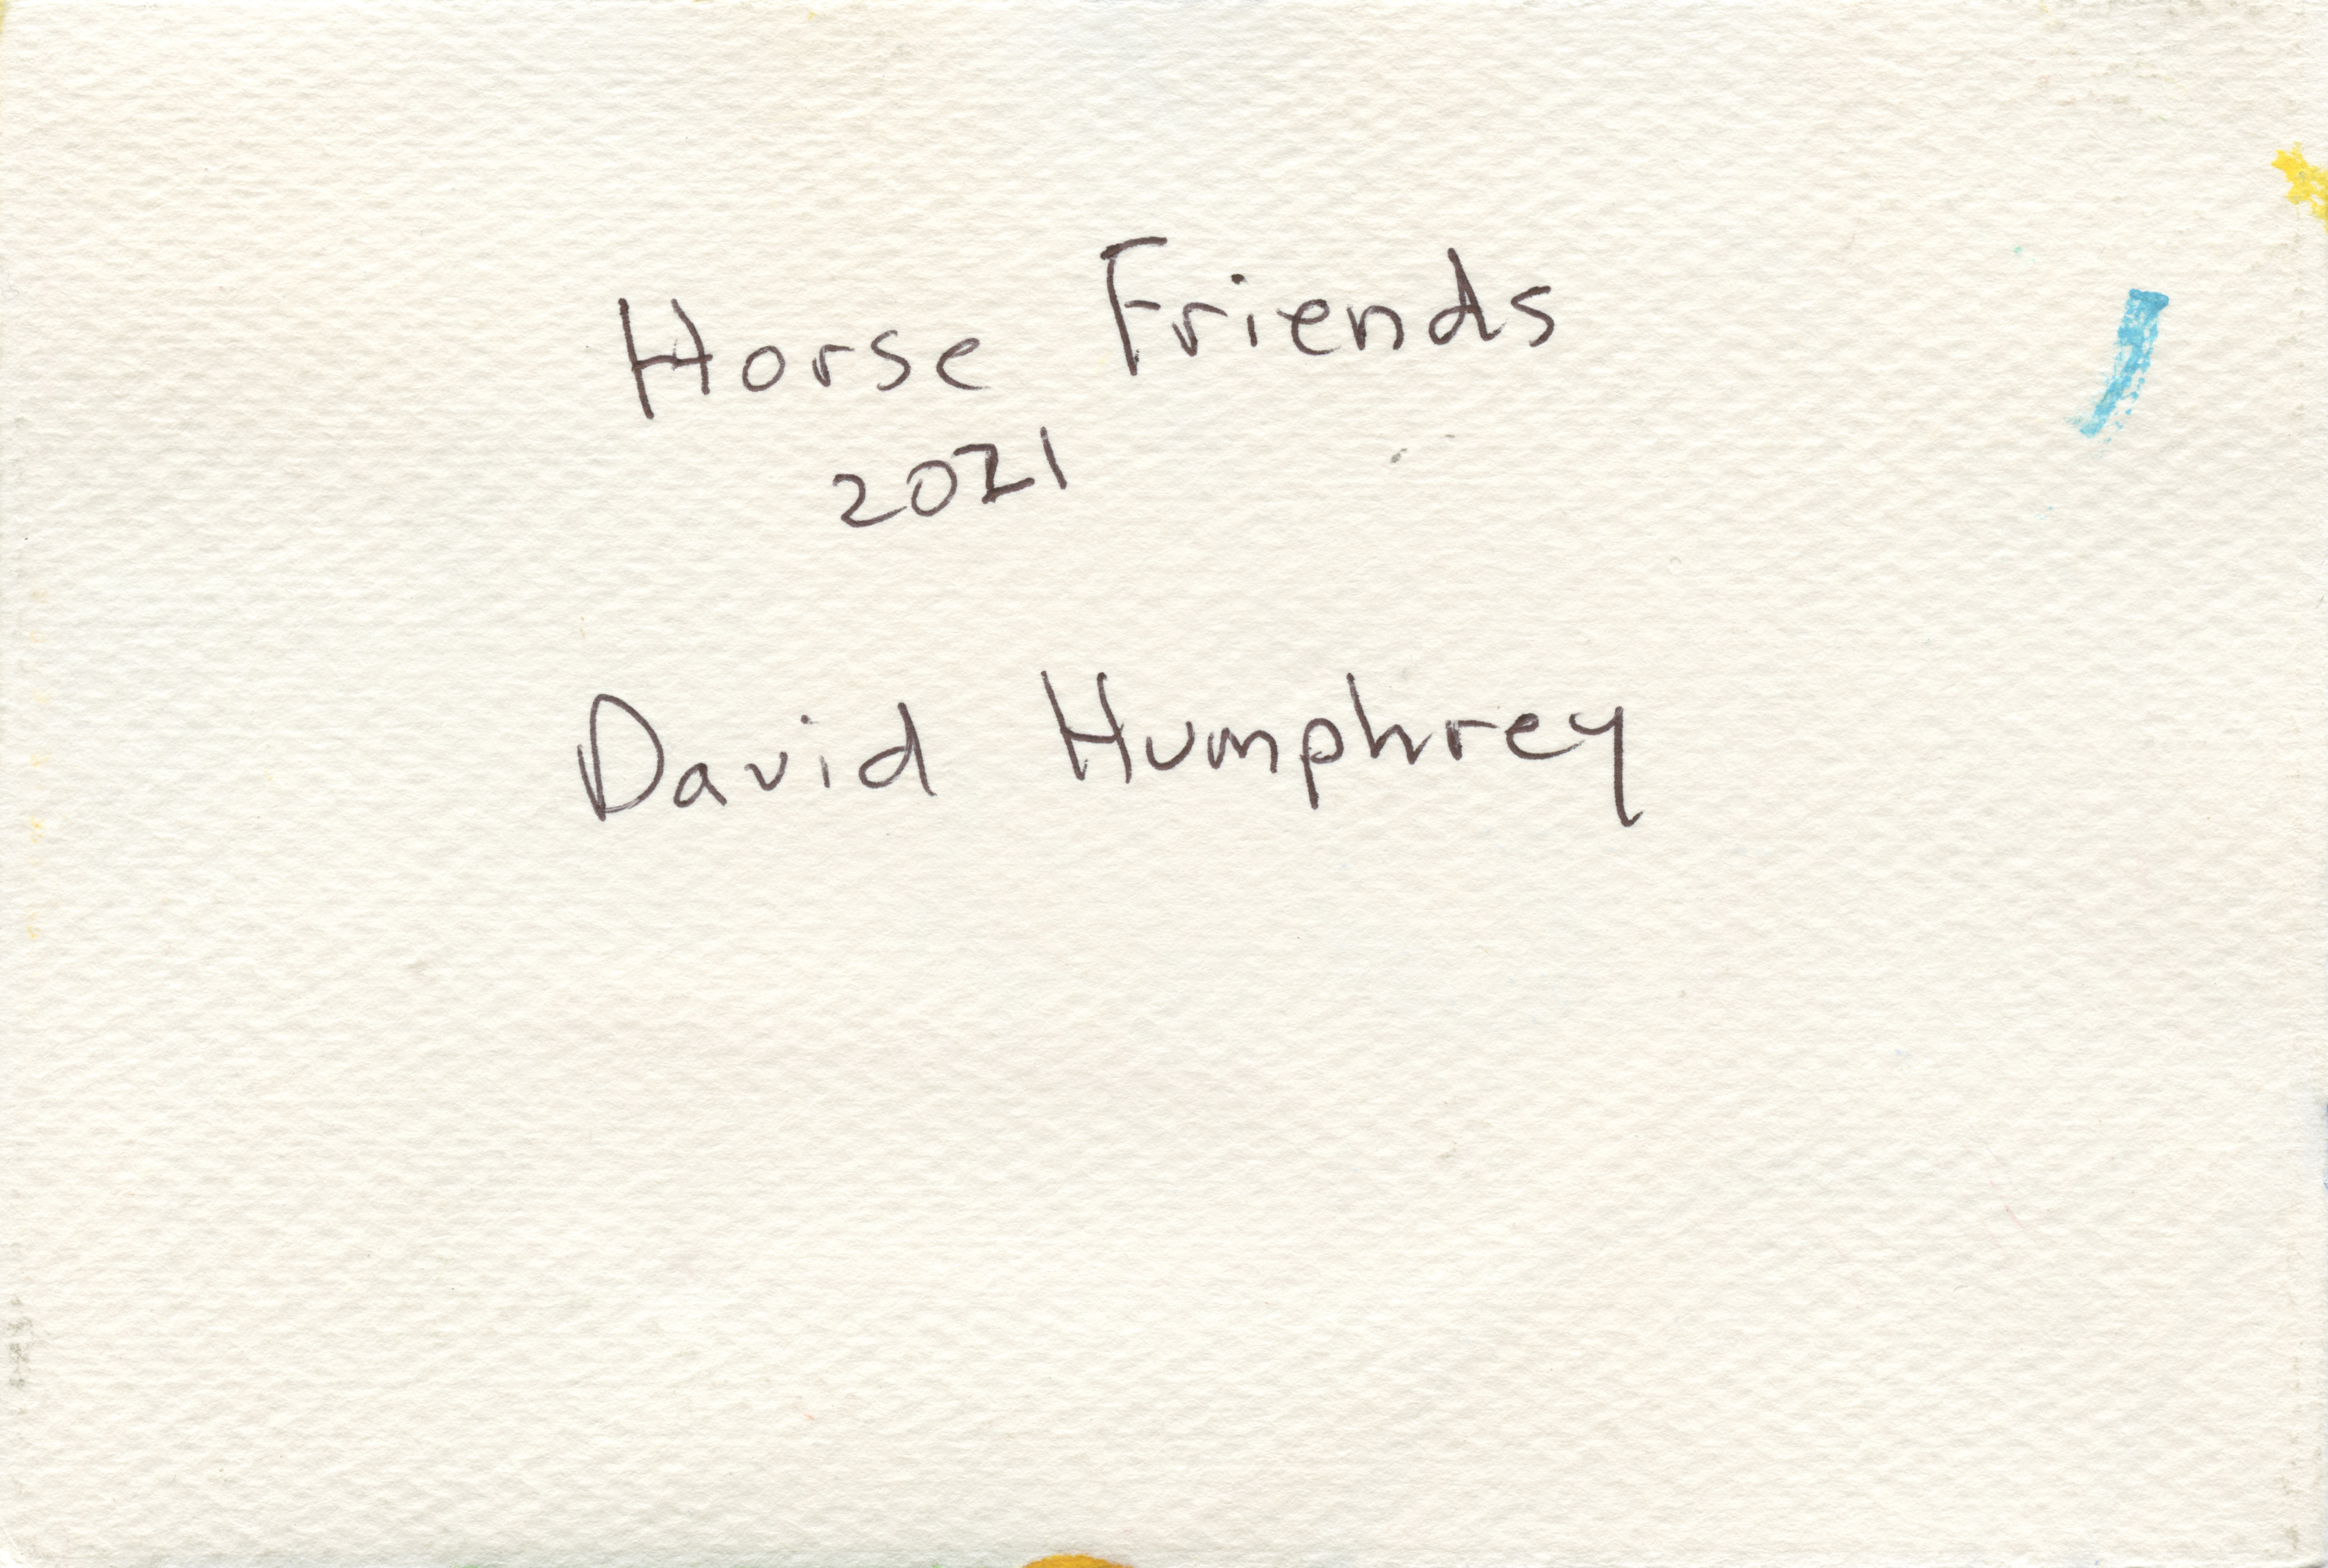 HORSE FRIENDS - back